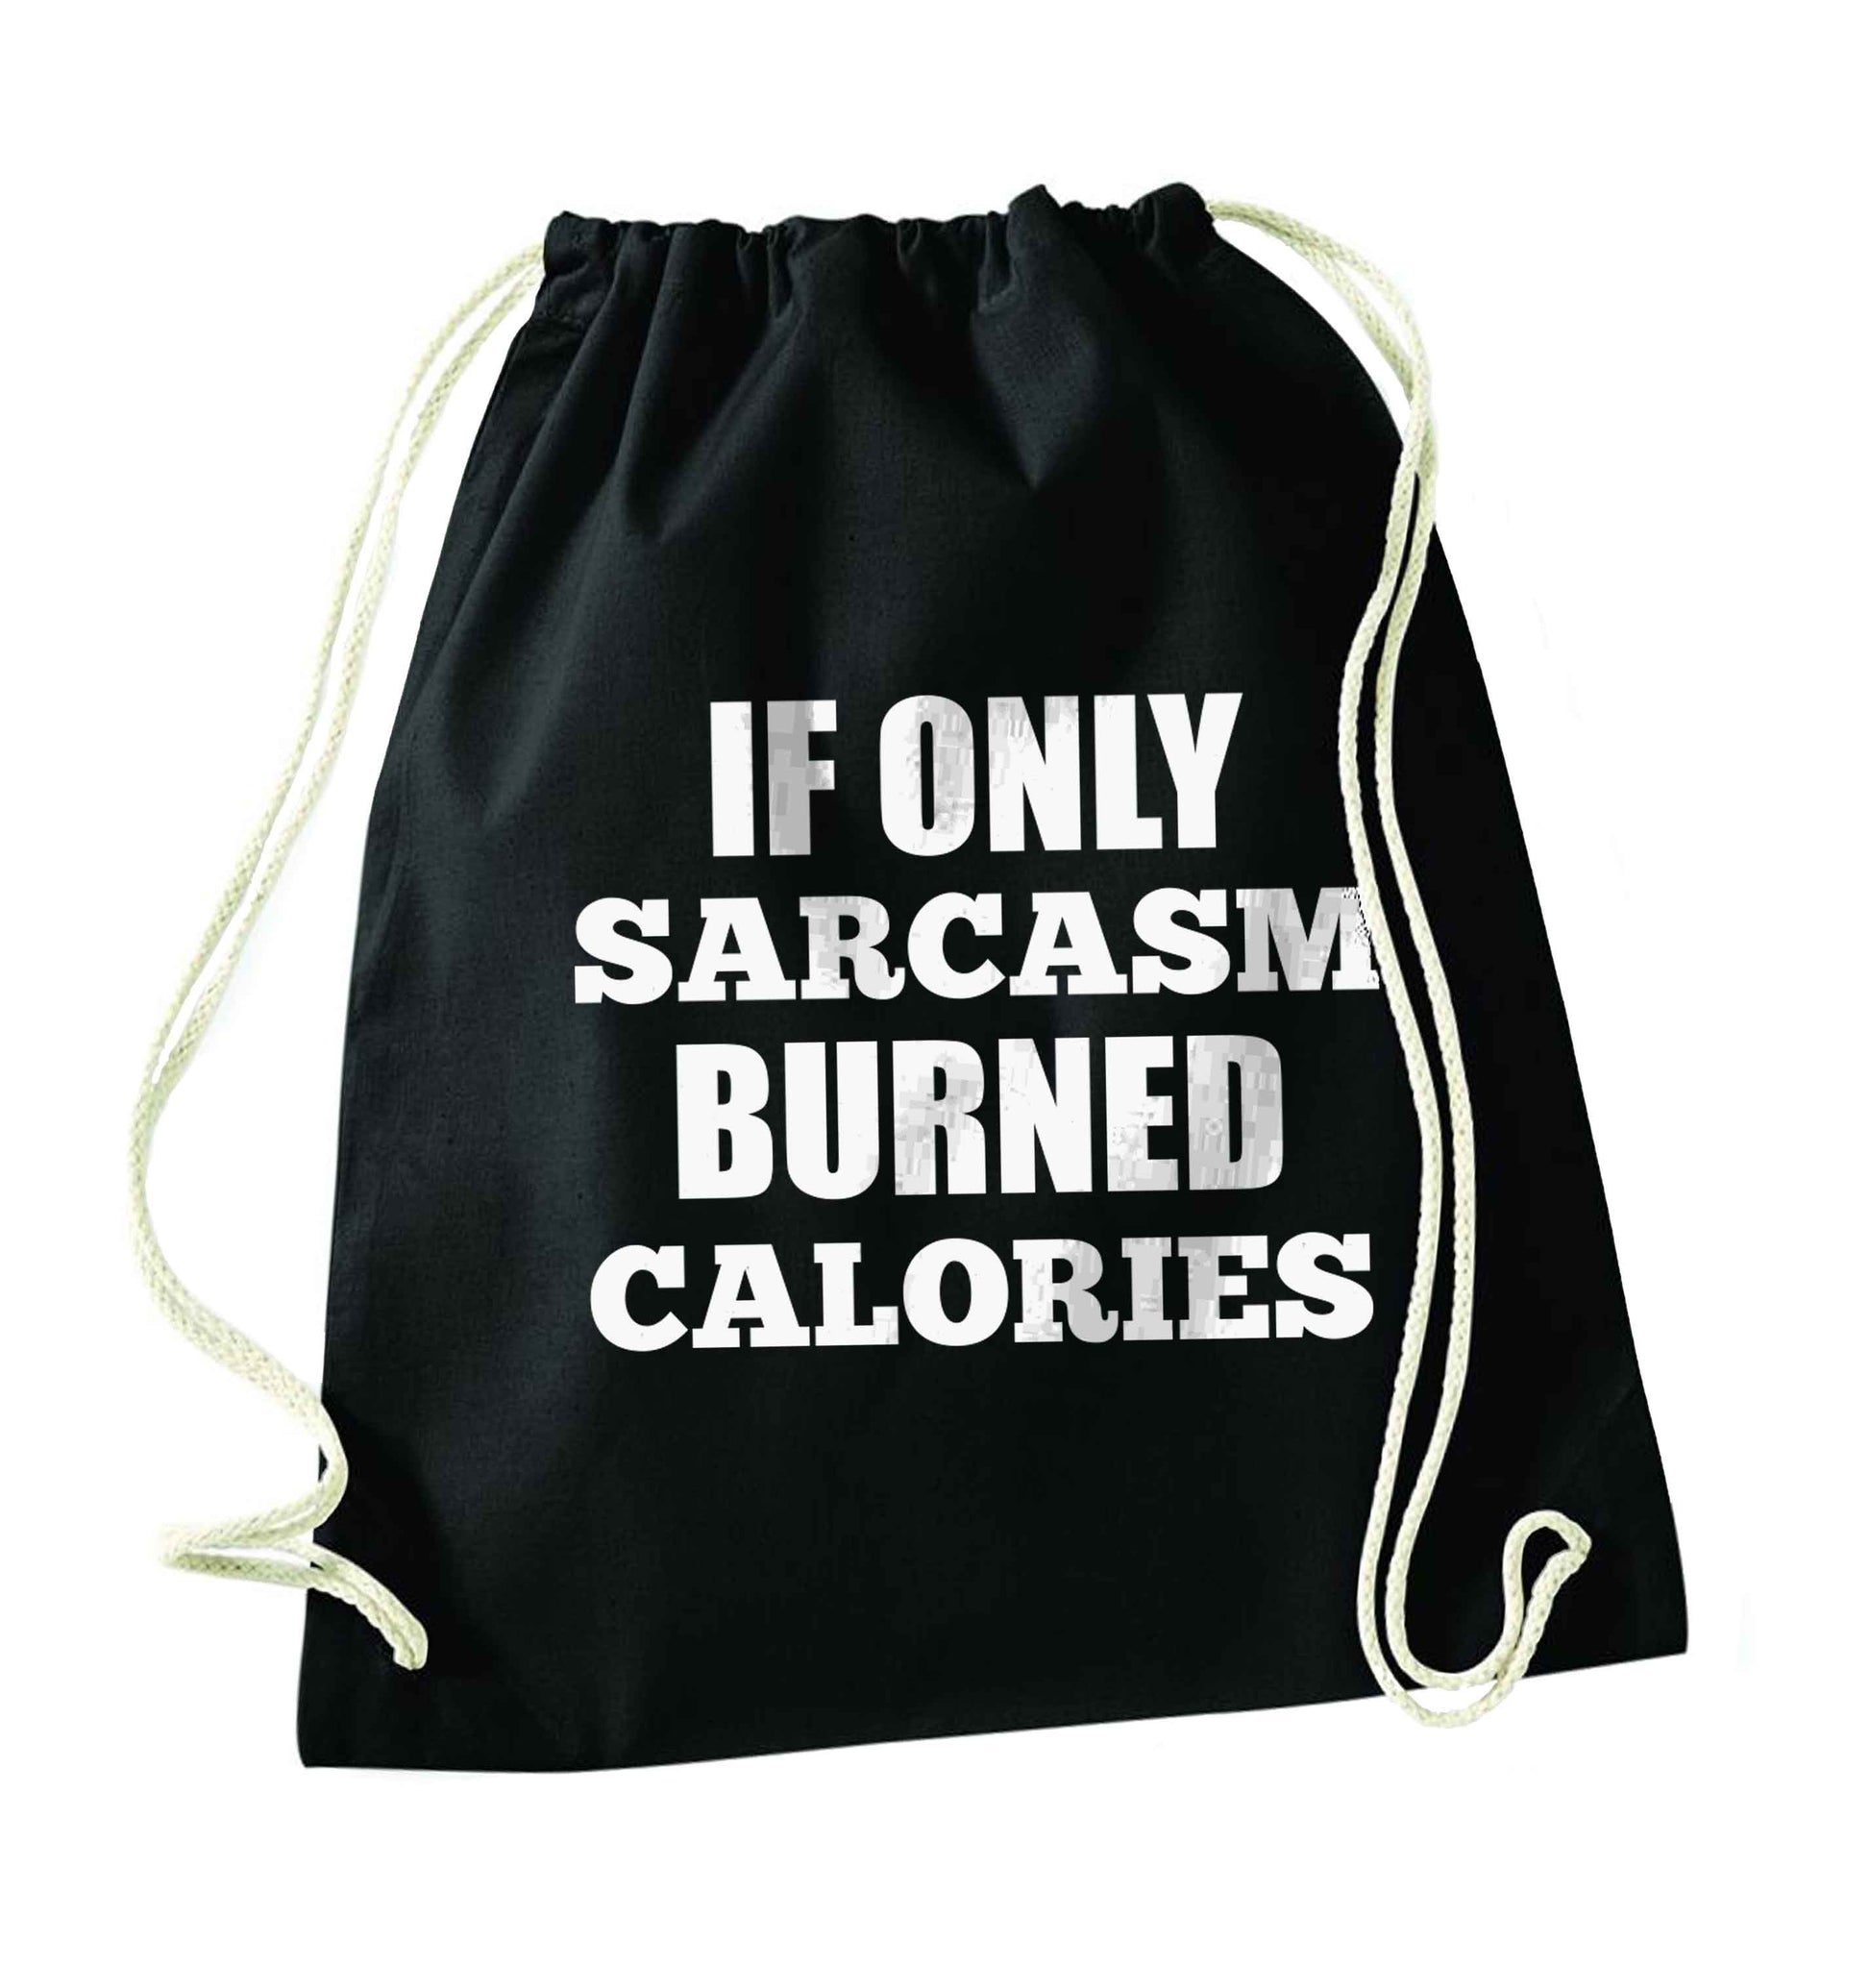 If only sarcasm burned calories black drawstring bag